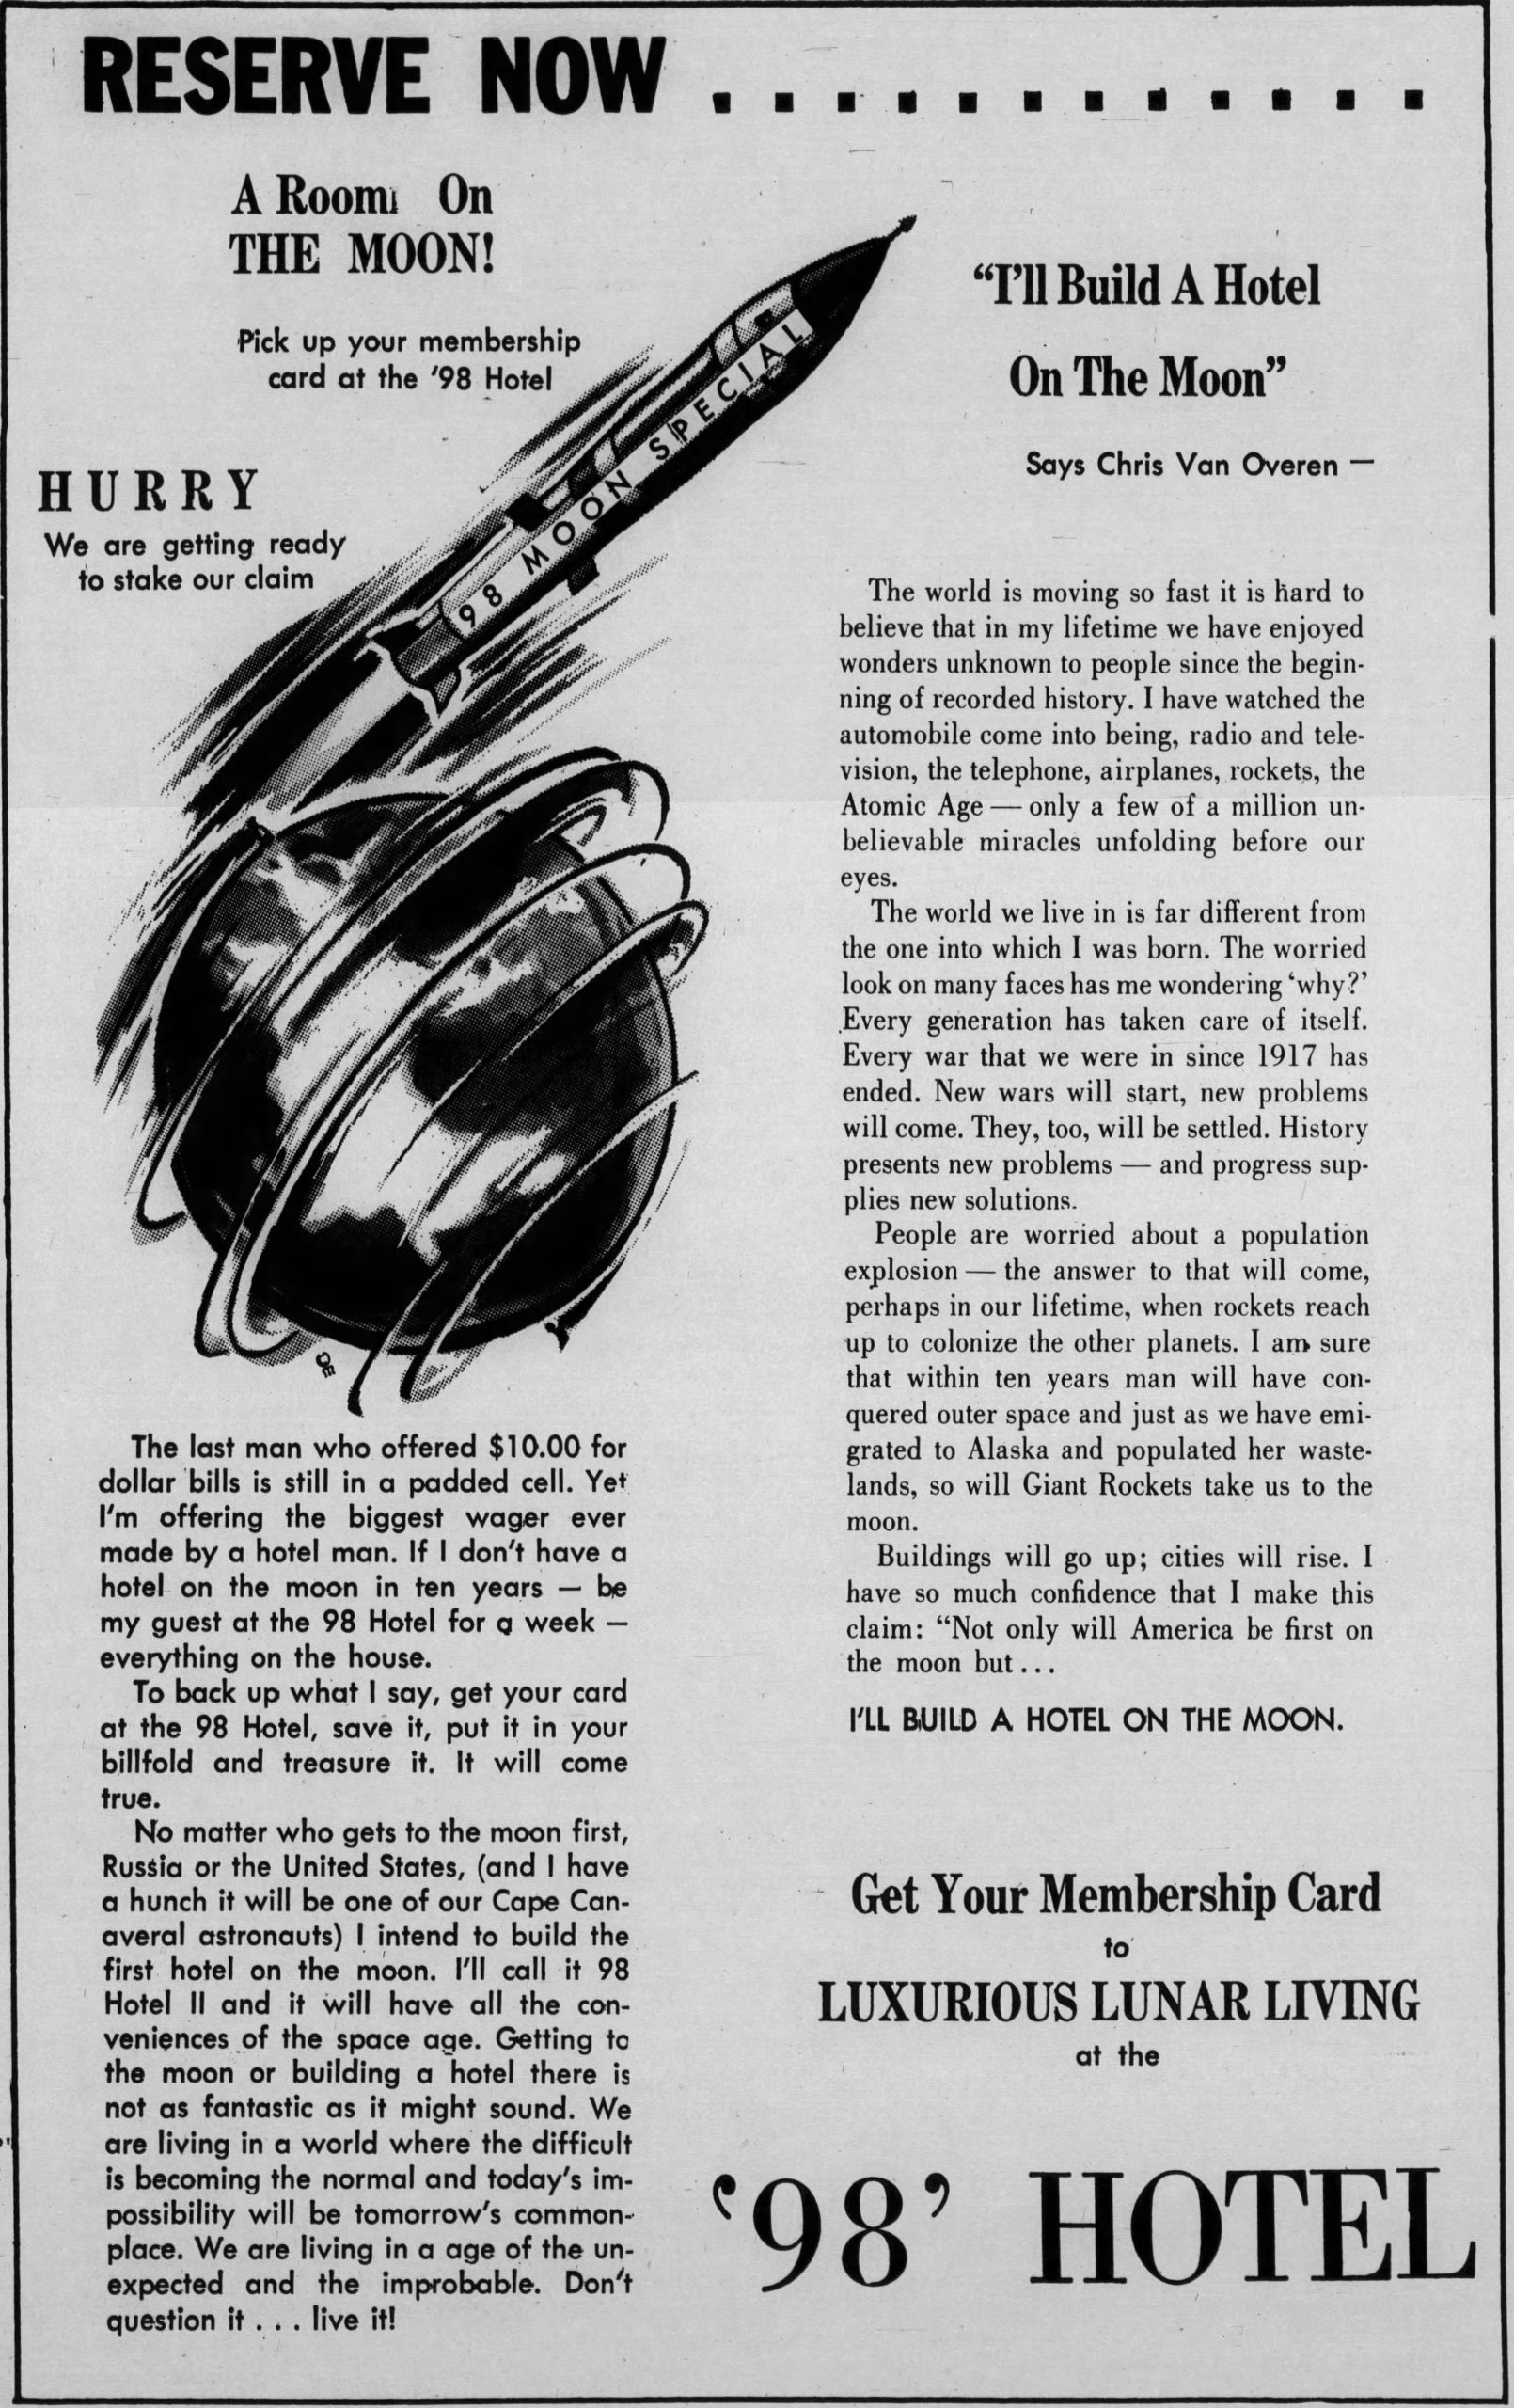 April 26, 1962 (Image: Newspapers.com)